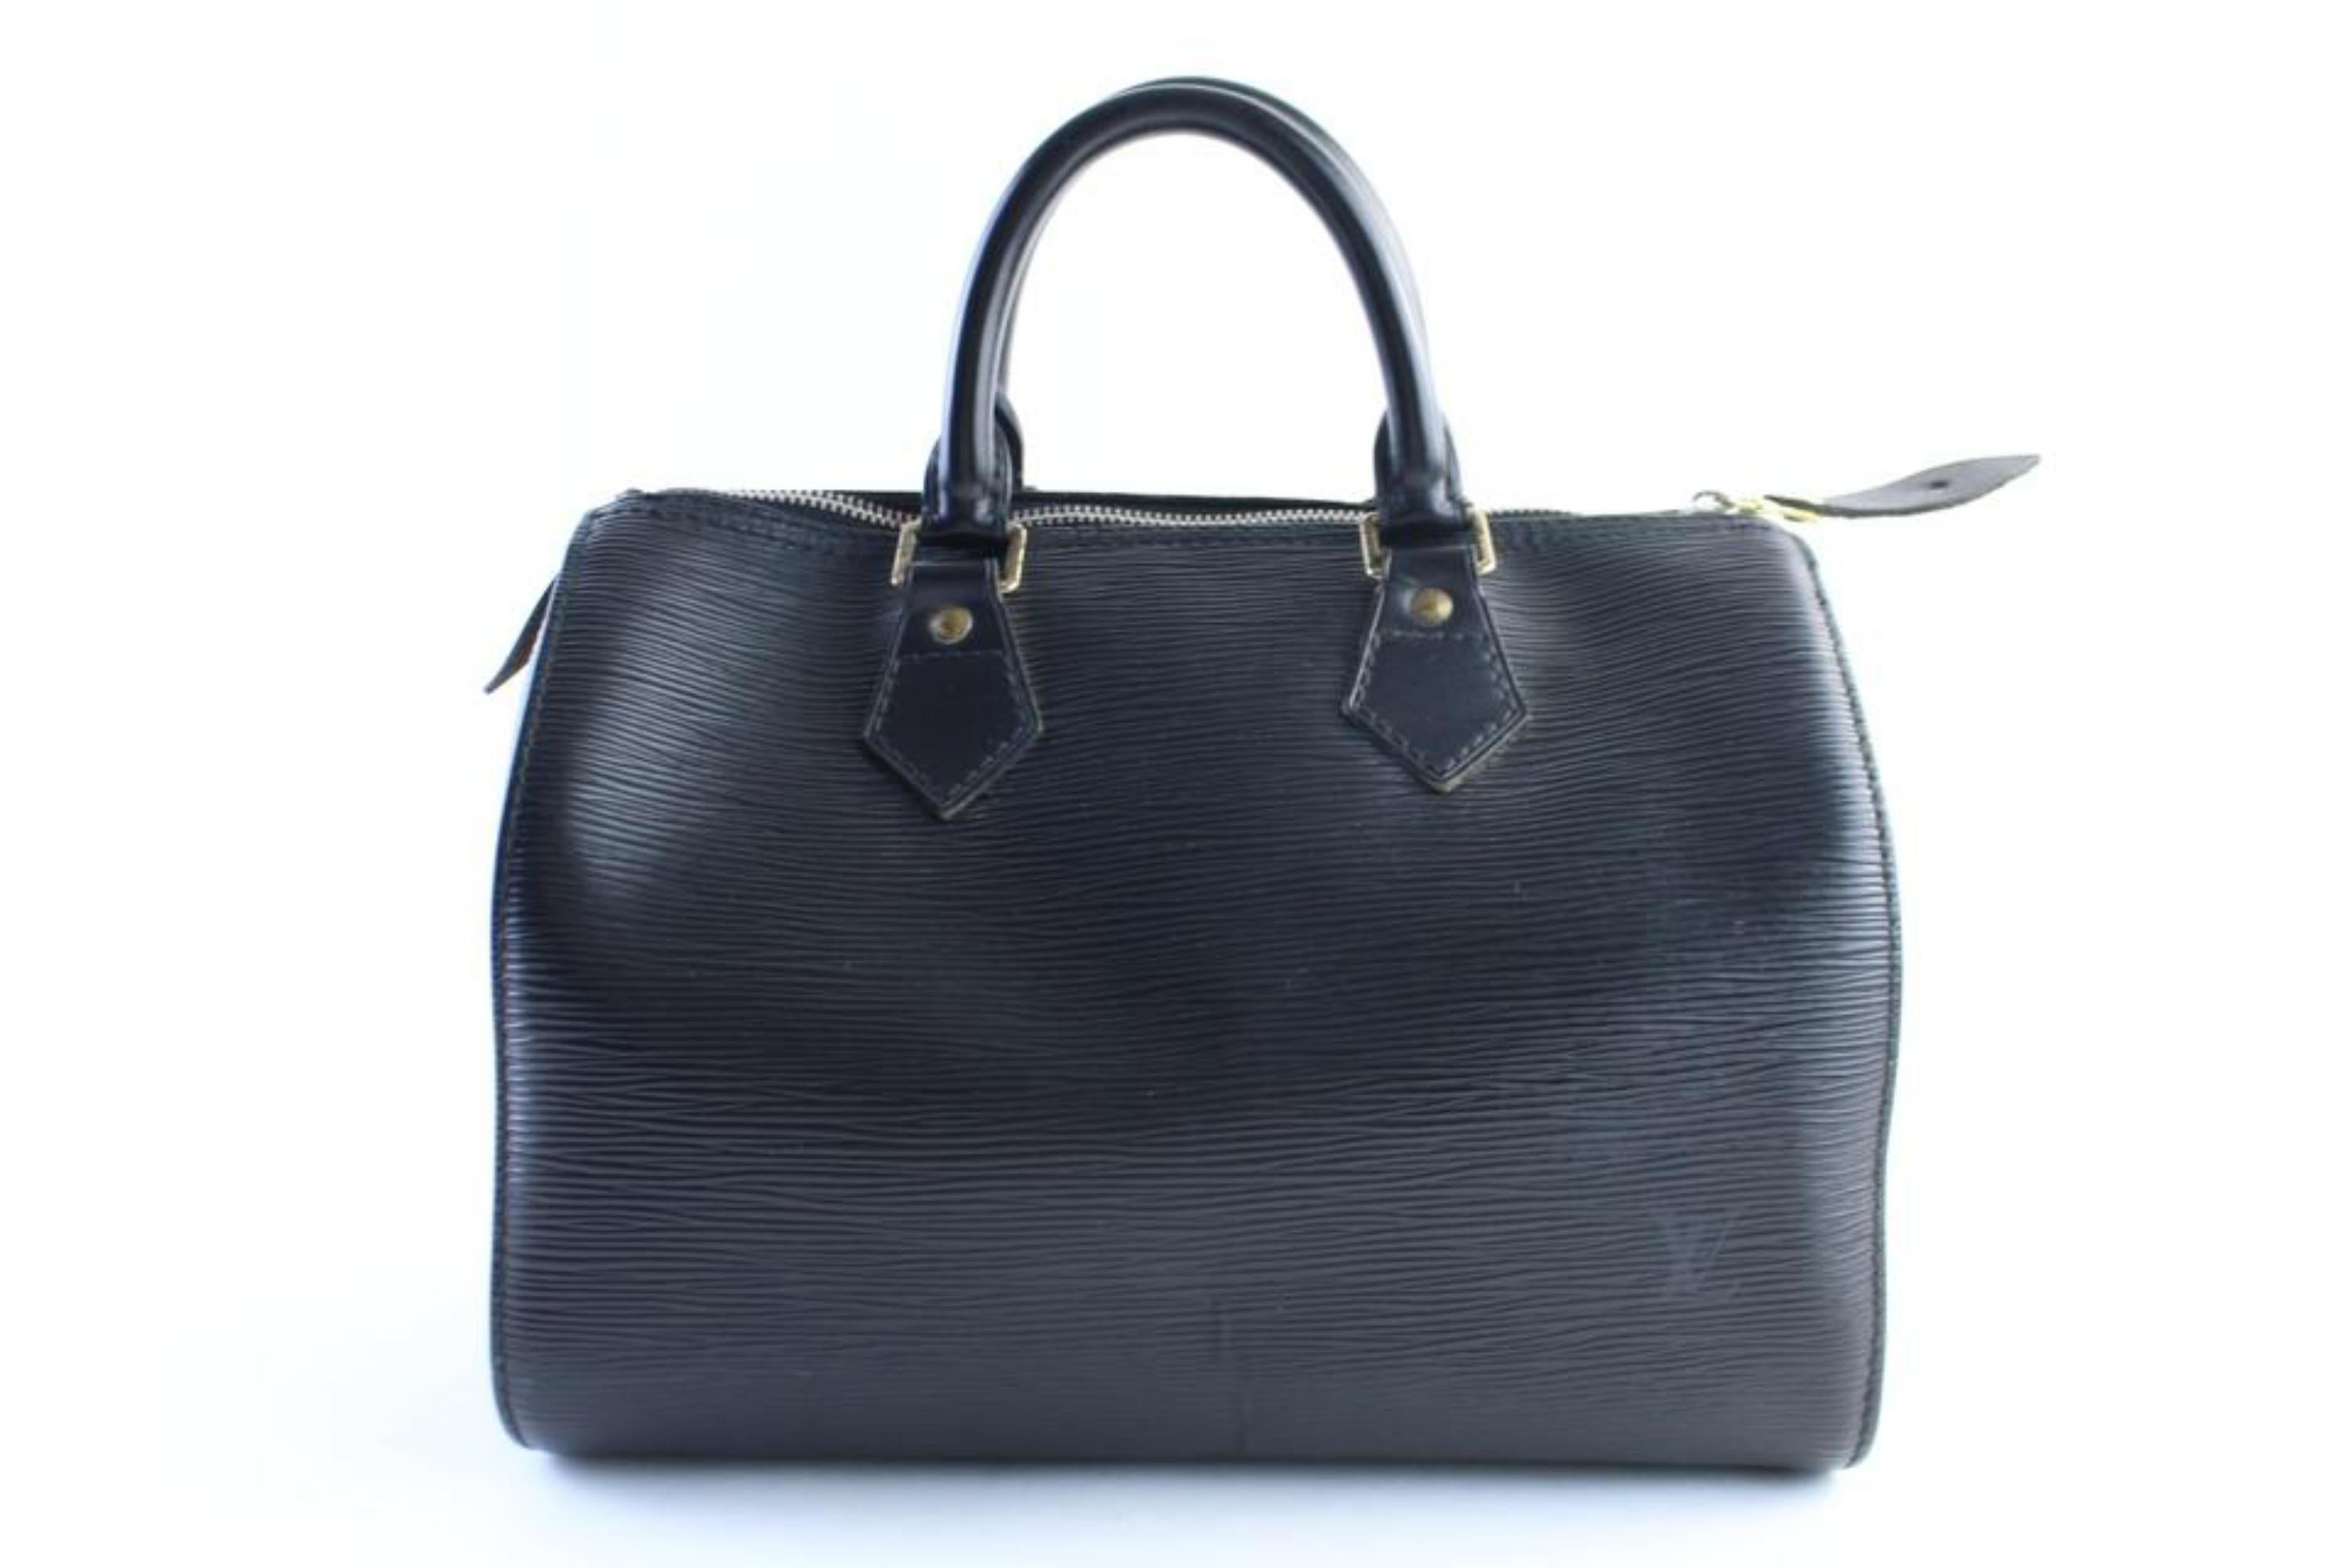 Louis Vuitton Speedy 25 24lr0618 Black Epi Leather Weekend/Travel Bag For Sale 4